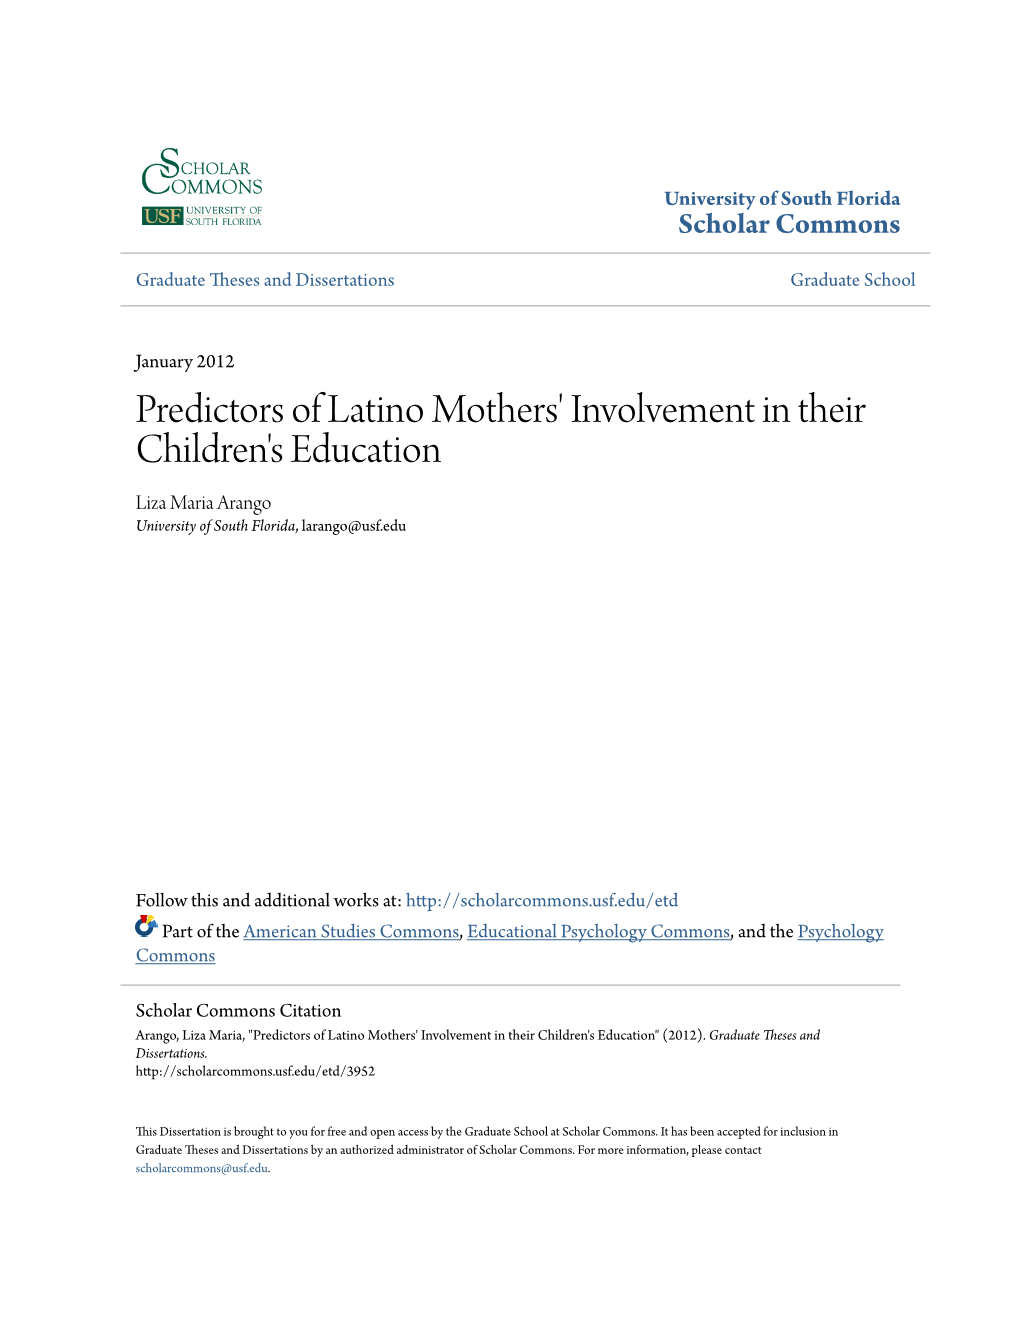 Predictors of Latino Mothers' Involvement in Their Children's Education Liza Maria Arango University of South Florida, Larango@Usf.Edu